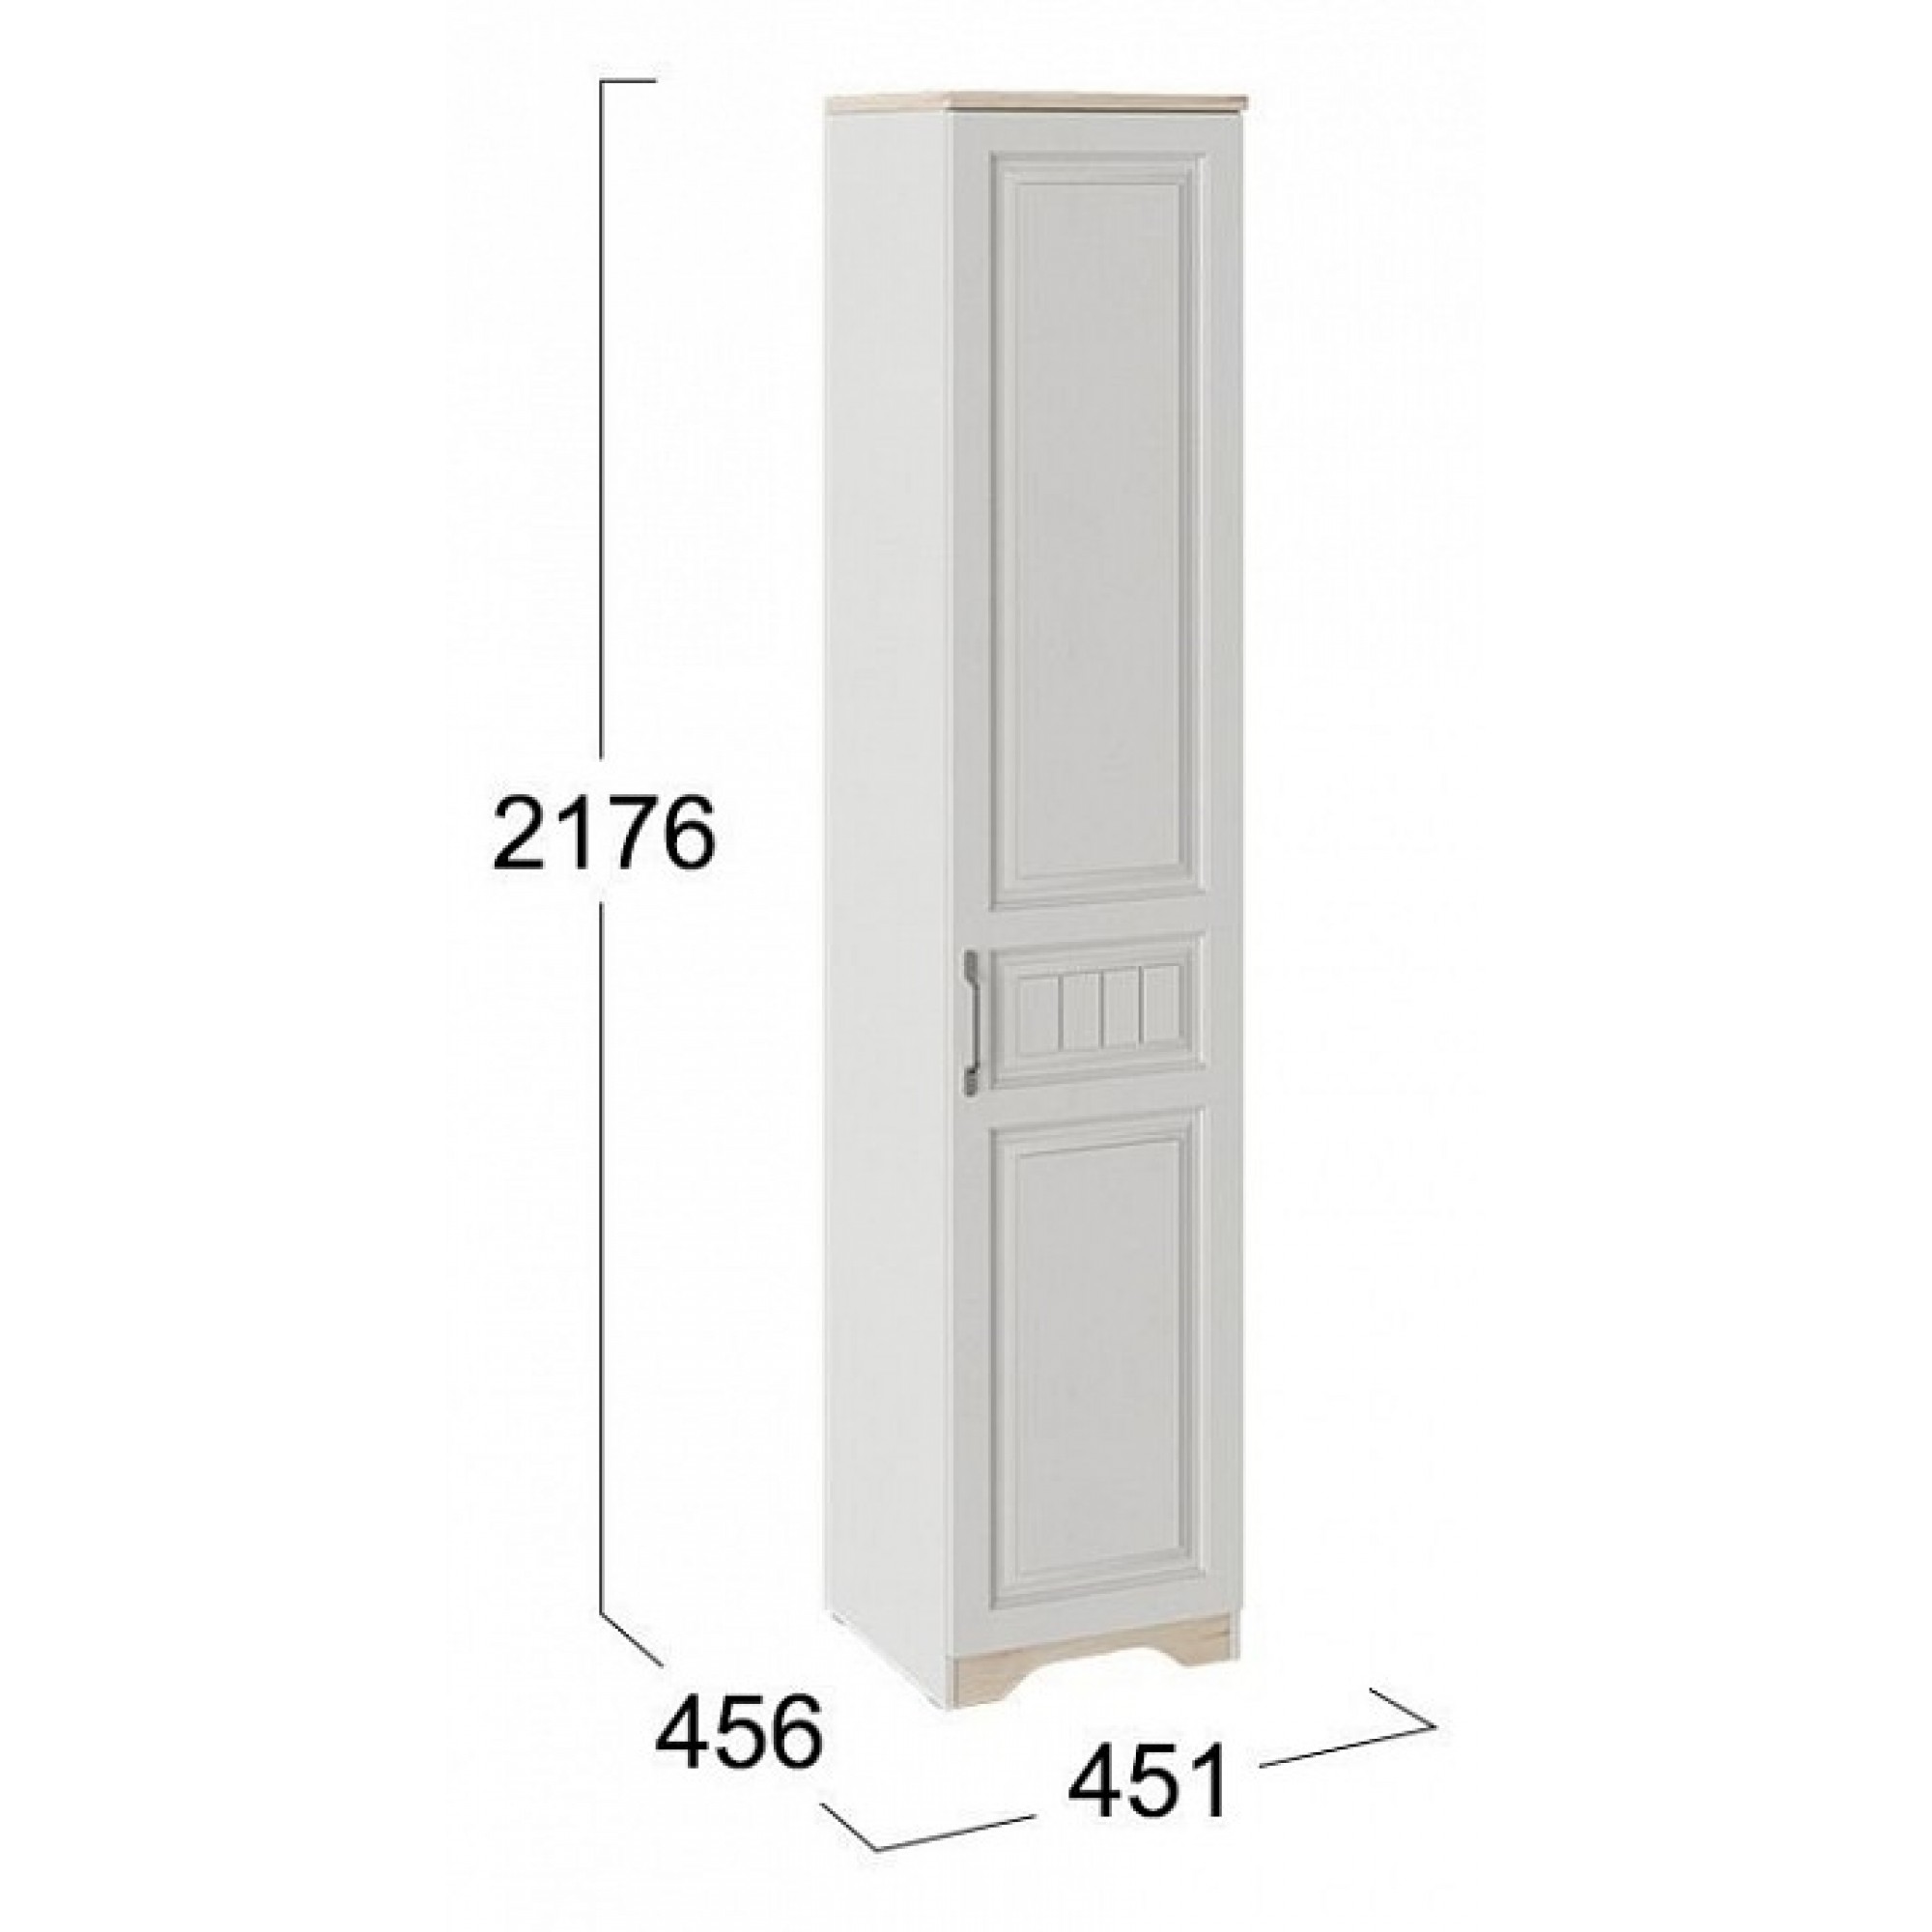 Шкаф для белья Тоскана СМ-353.21.001R белый 451x456x2176(TRI_194921)